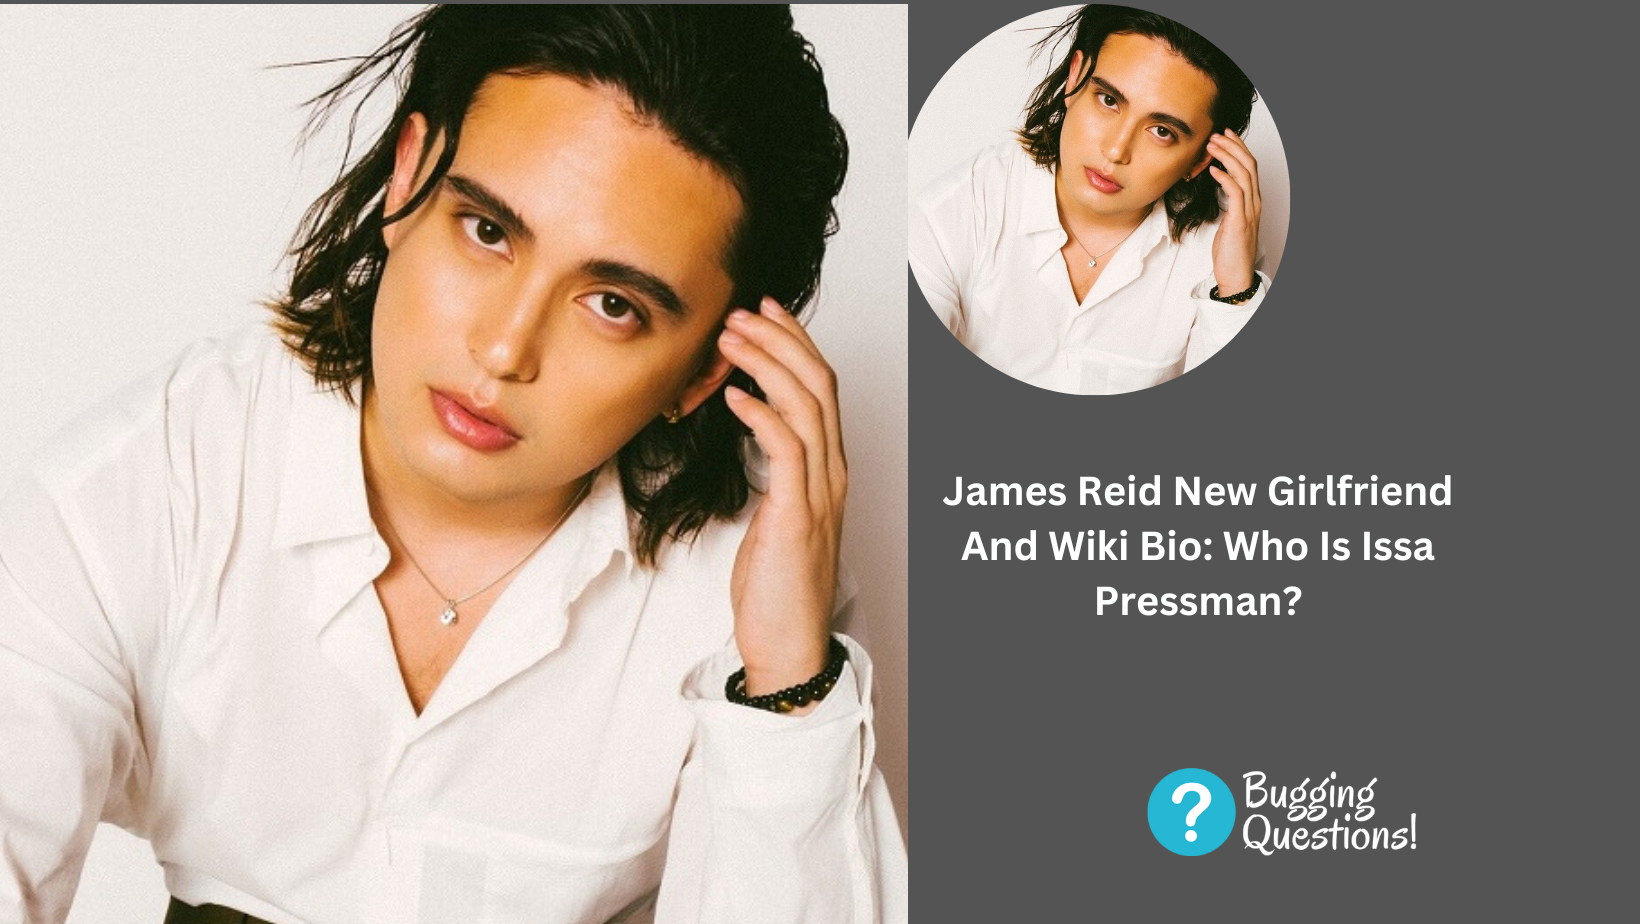 James Reid New Girlfriend And Wiki Bio: Who Is Issa Pressman?